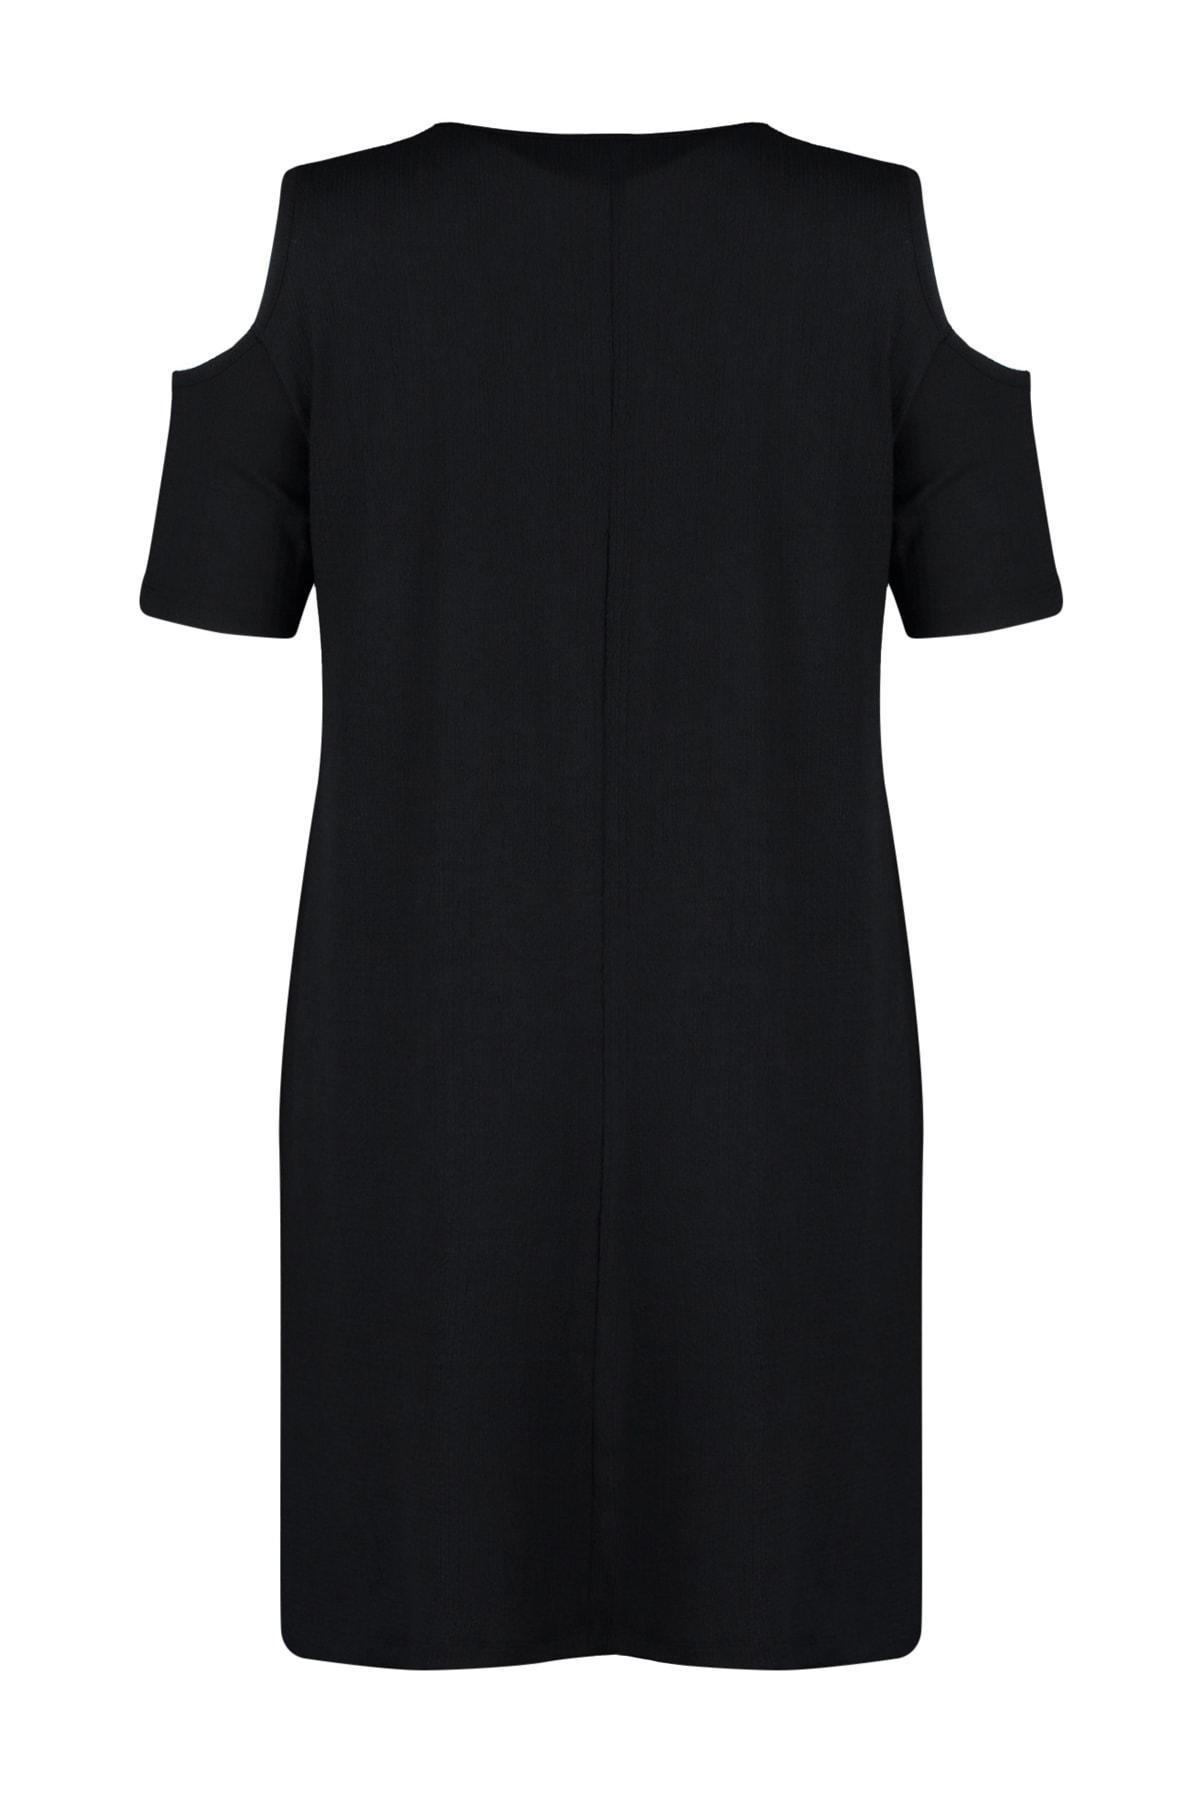 Trendyol - Black A-Line Plus Size Dress